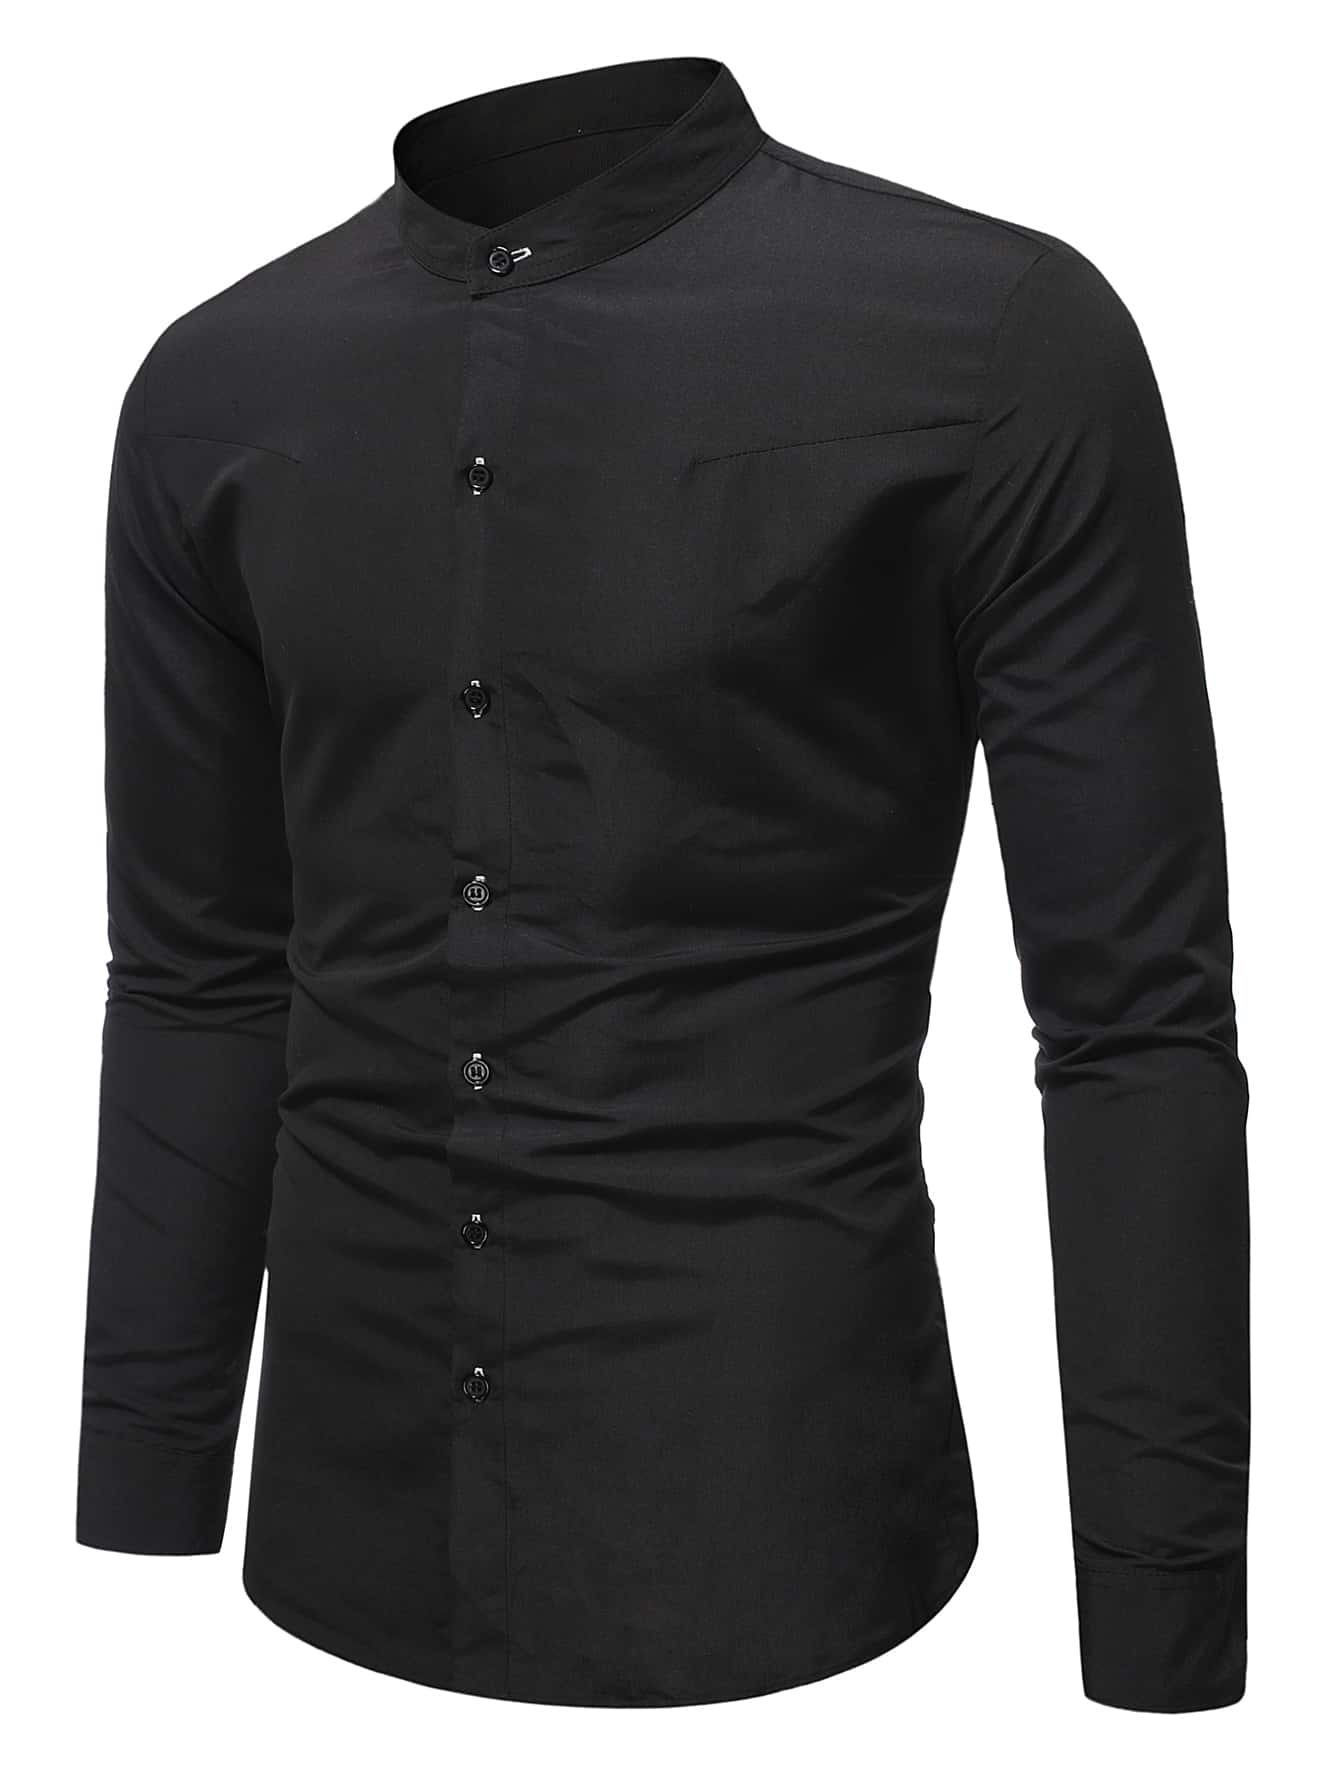 Manfinity Basics Men Mock Neck Button Up Shirt